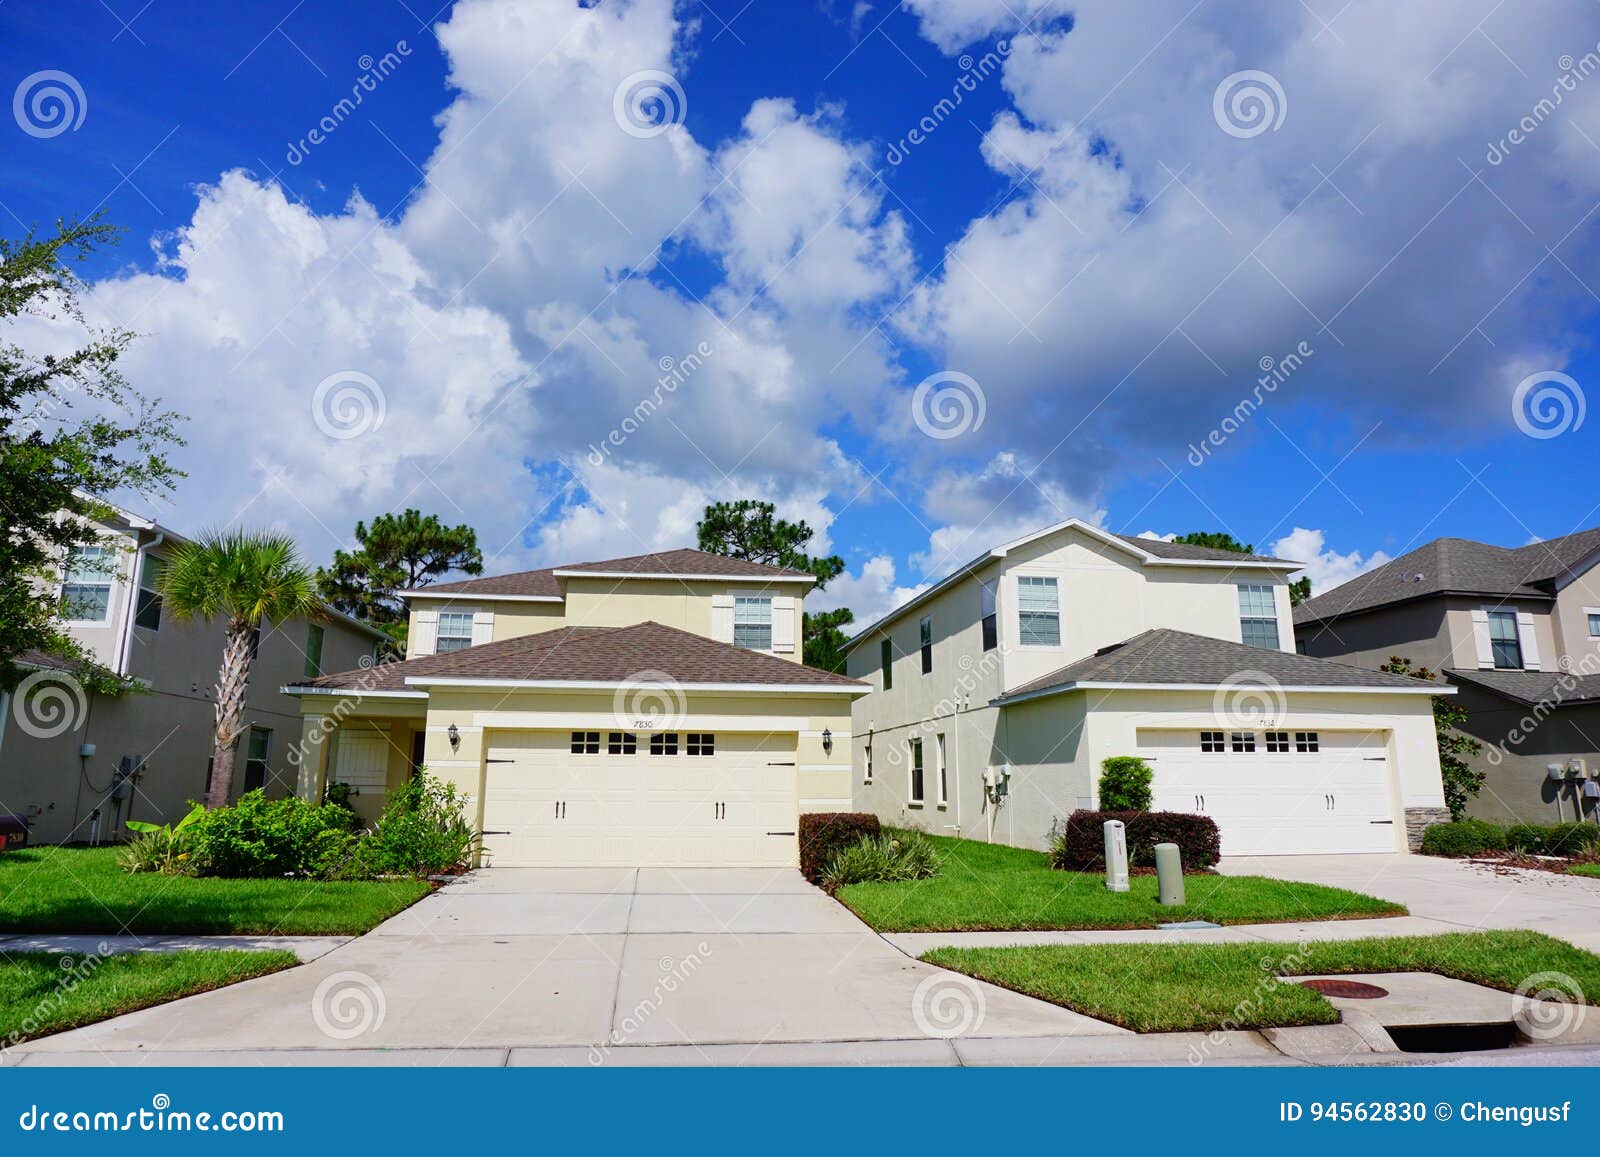 Tampa palms community editorial image. Image of florida - 94562830